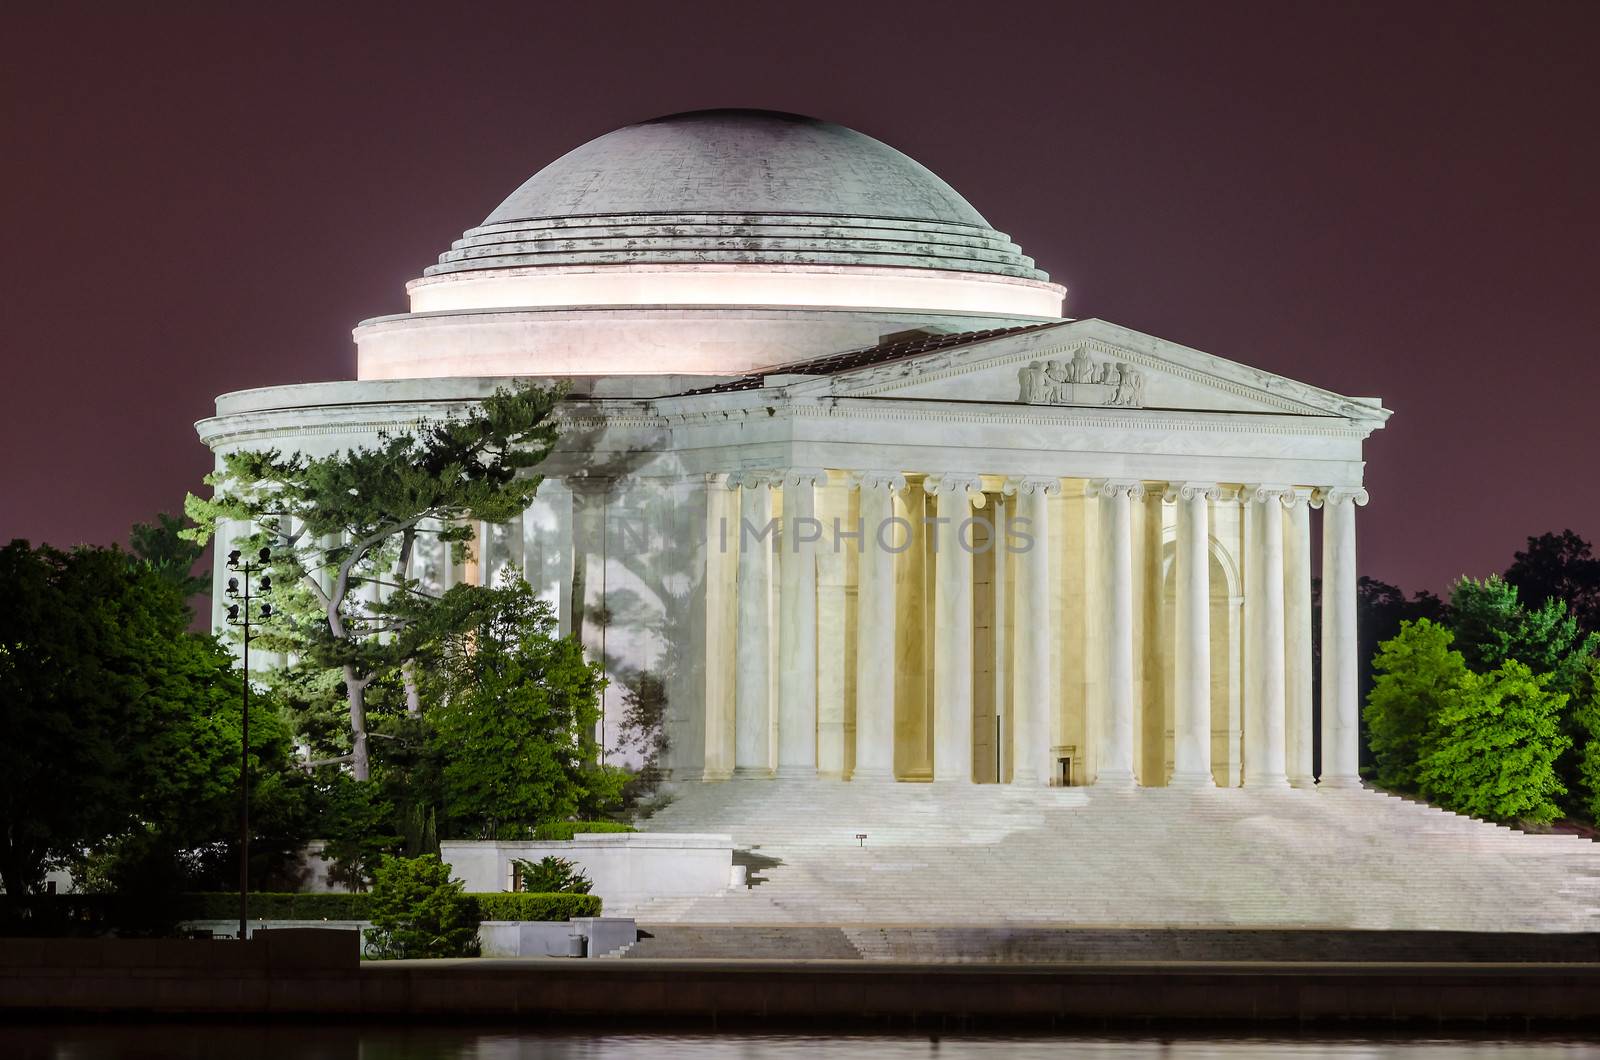 Jefferson Memorial in Washington DC at night by marcorubino